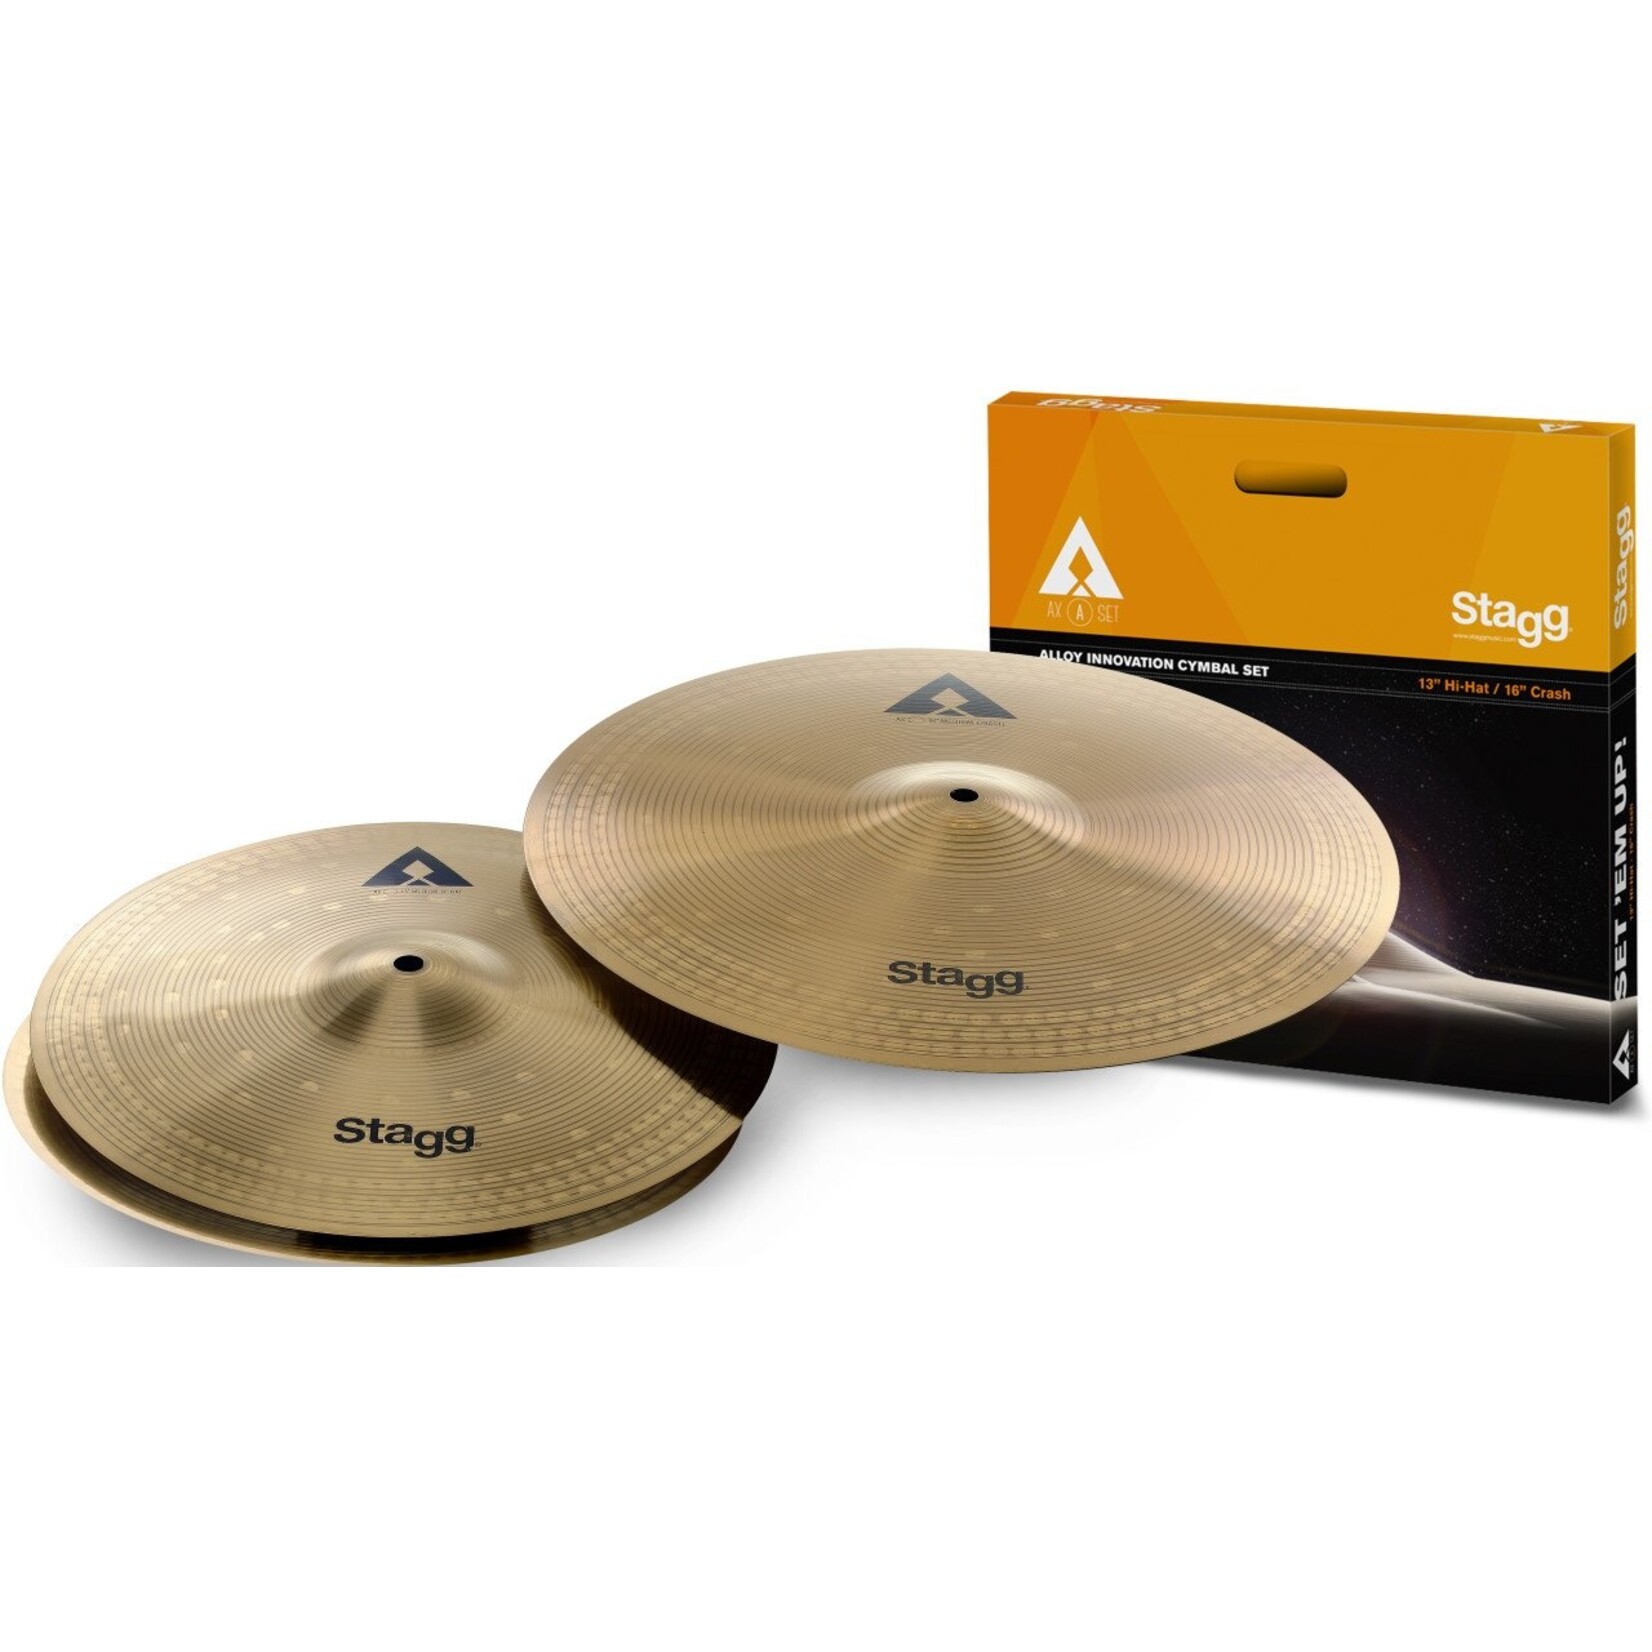 STAGG AXA Cymbal Set-13" Hi-Hats & 16" Crash Cymbal